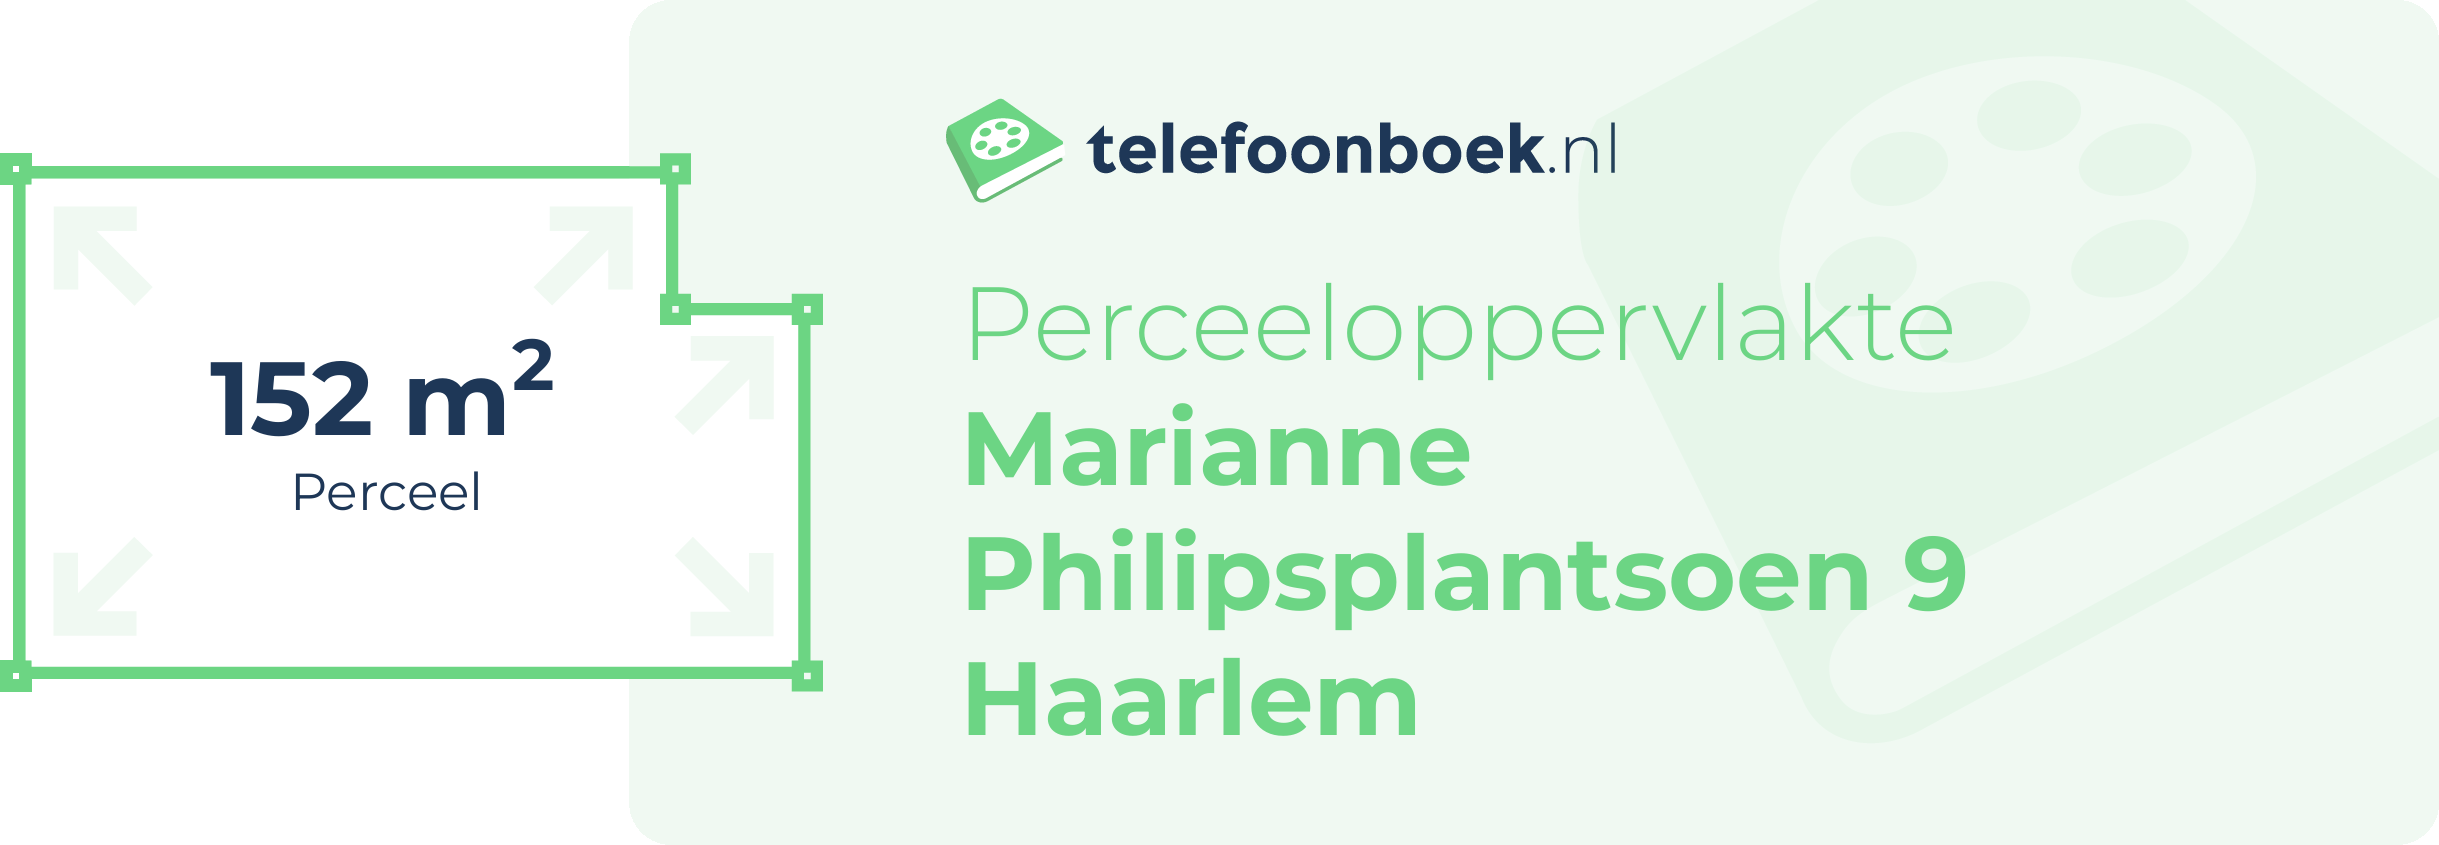 Perceeloppervlakte Marianne Philipsplantsoen 9 Haarlem